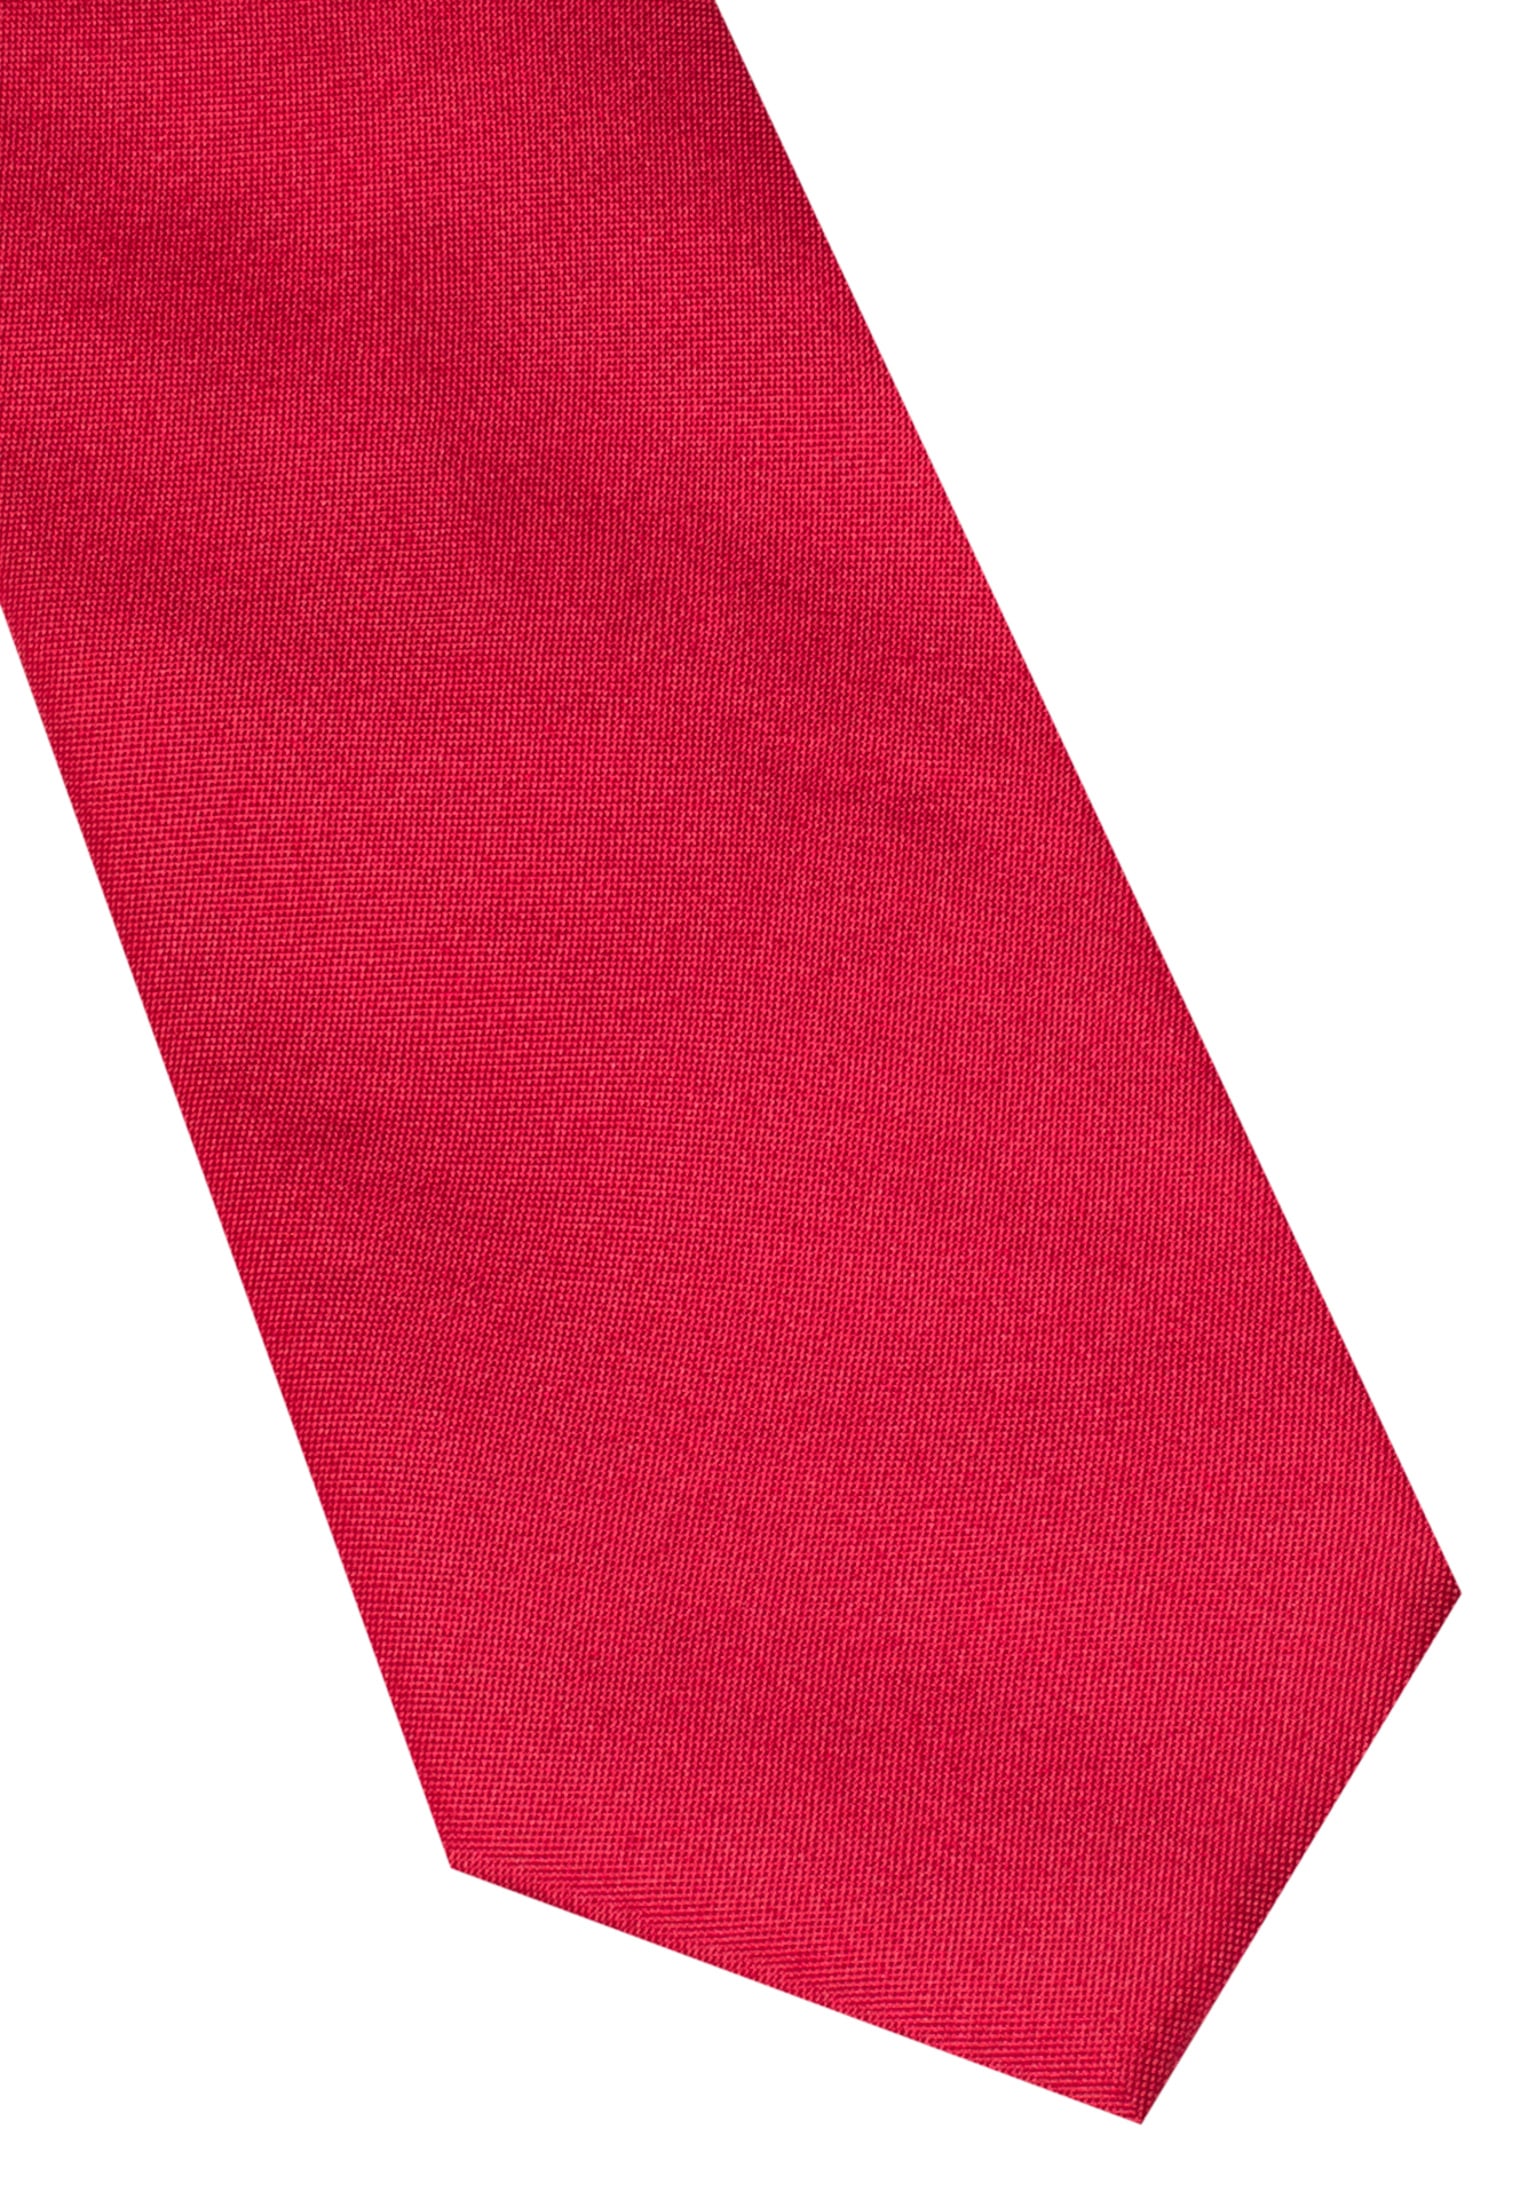 Krawatte in rot unifarben | rot | 142 | 1AC00025-05-01-142